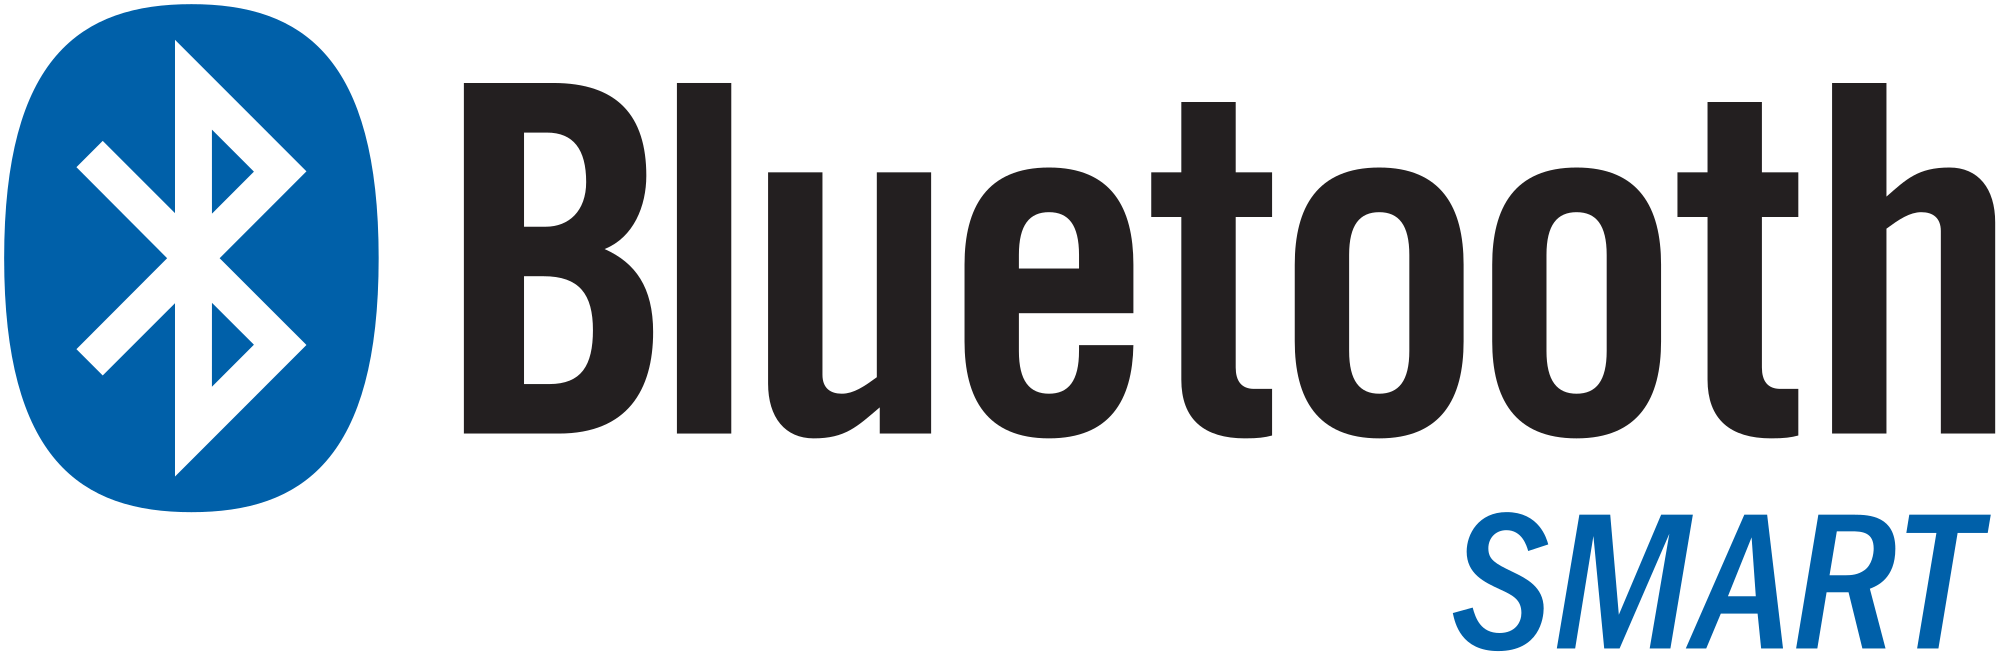 Ble Logo - Bluetooth Low Energy